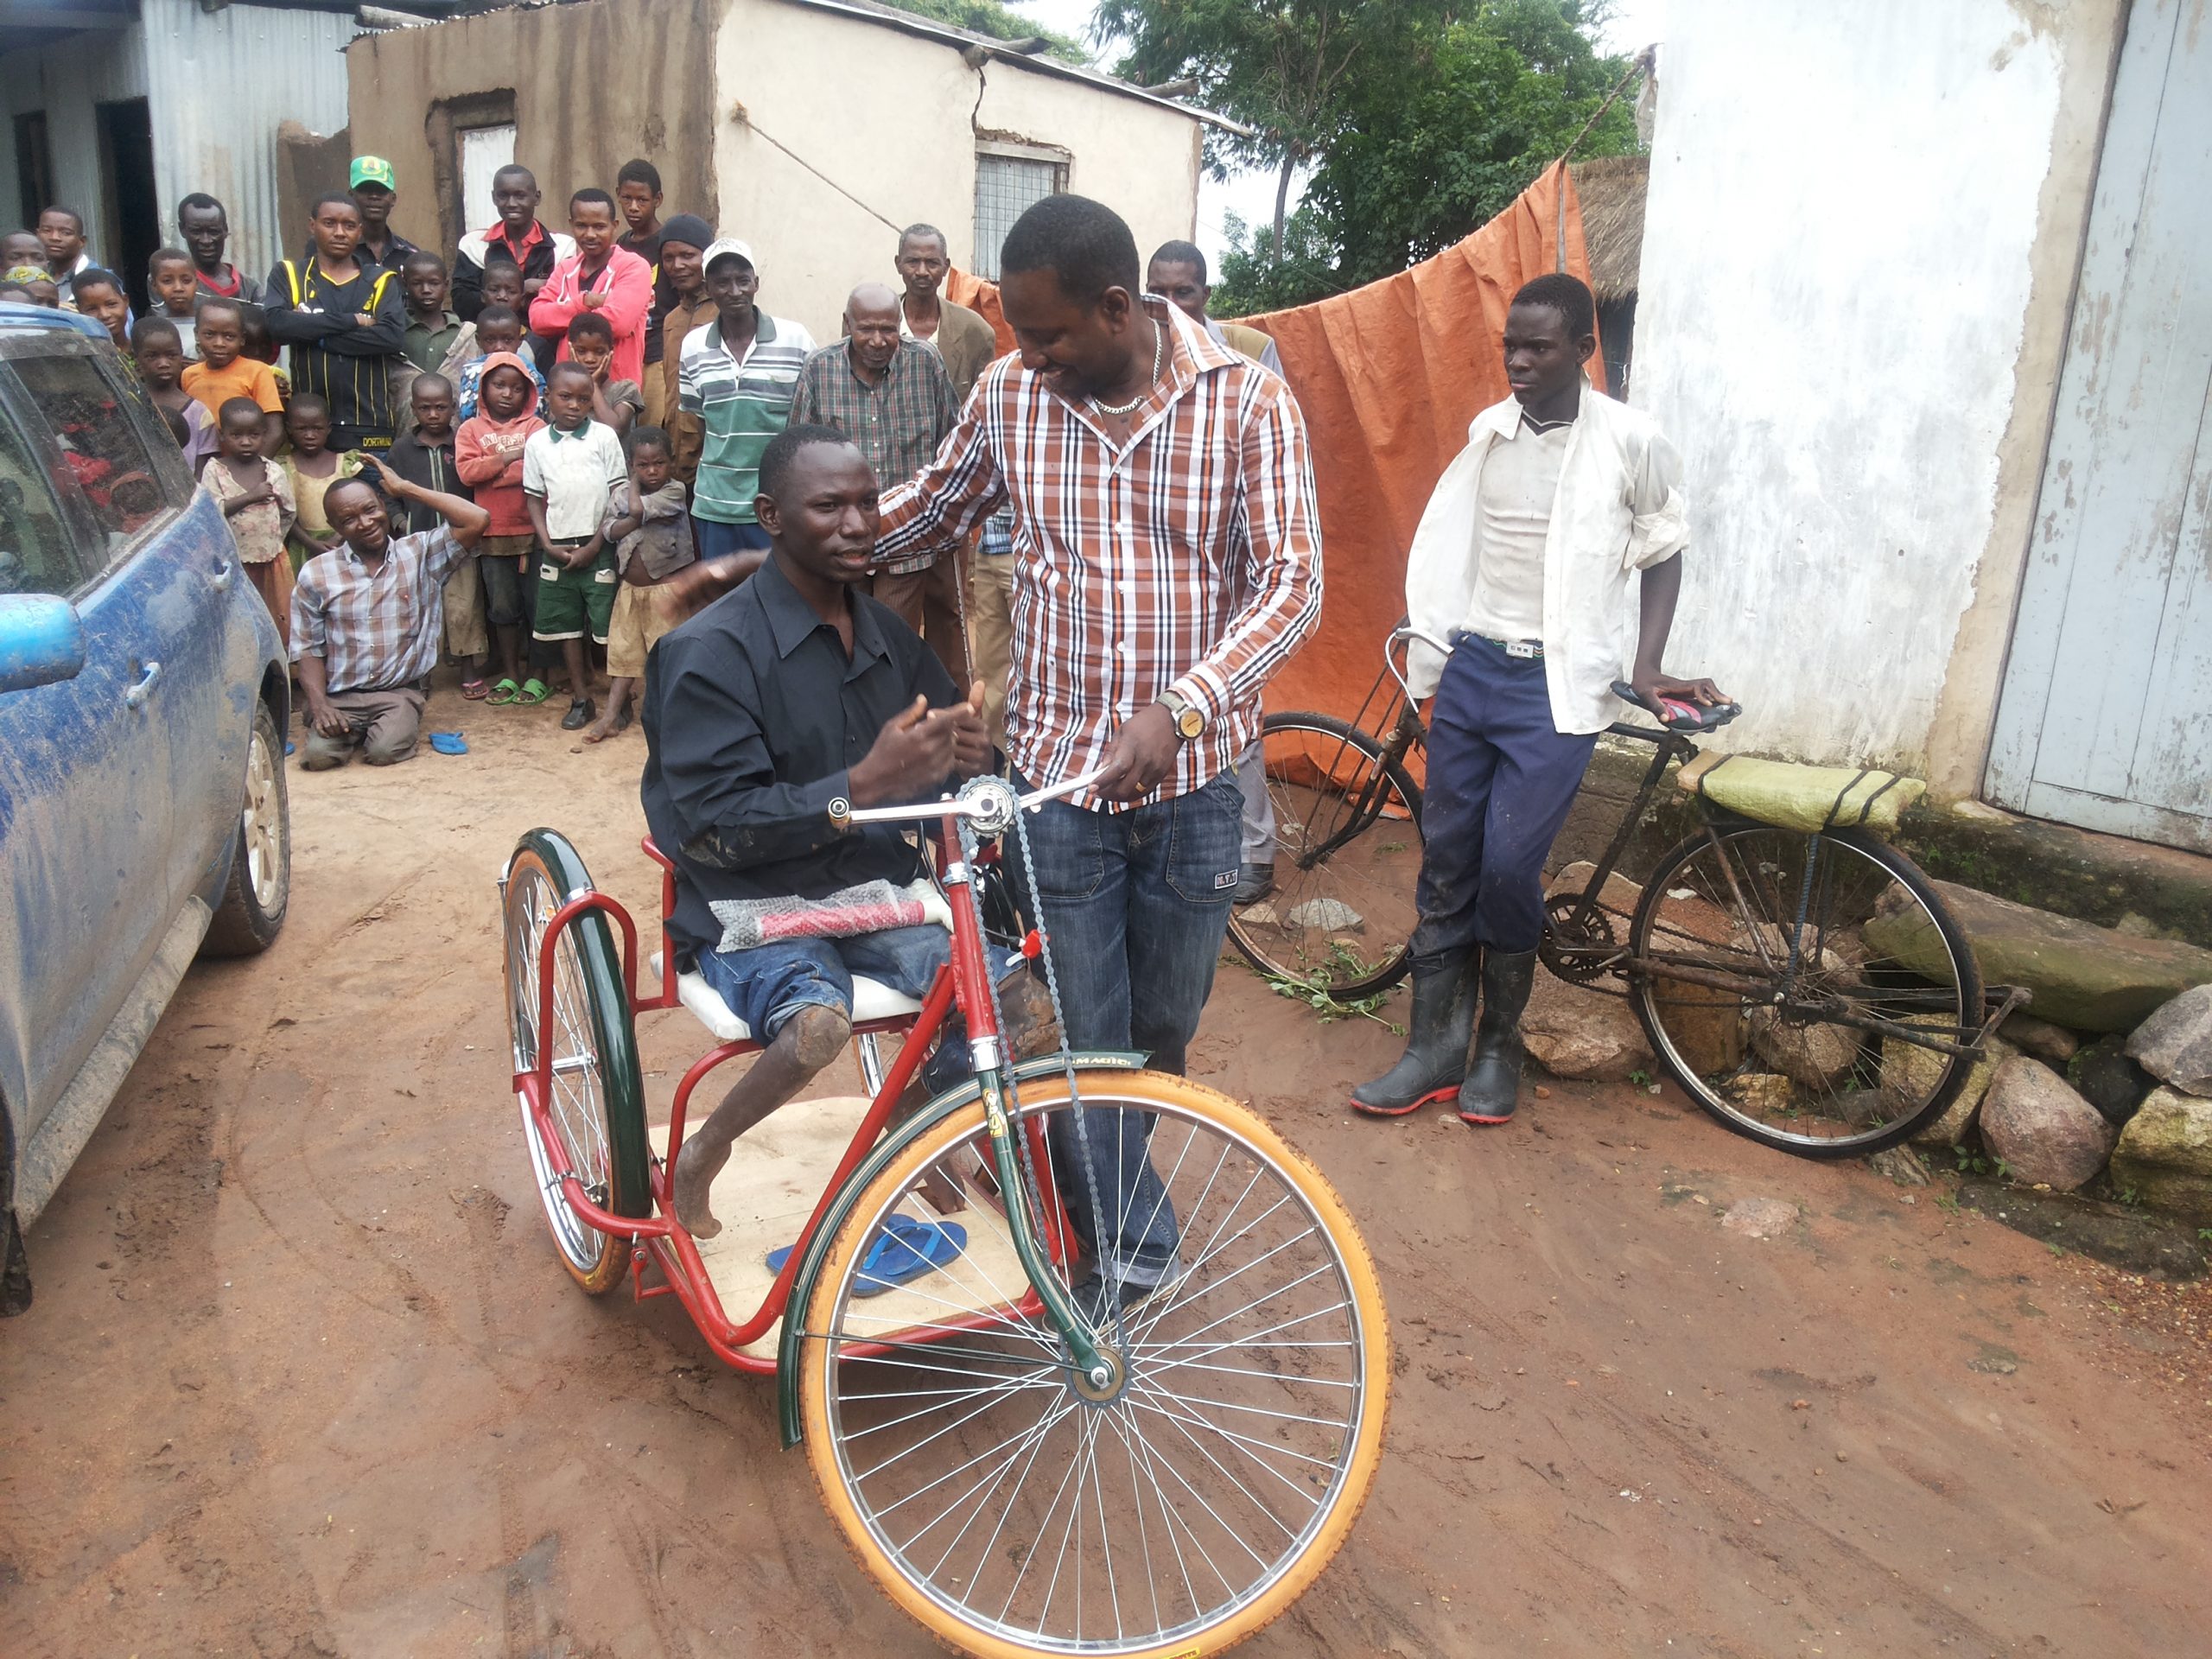 The Tanzania Wheel Chair Project